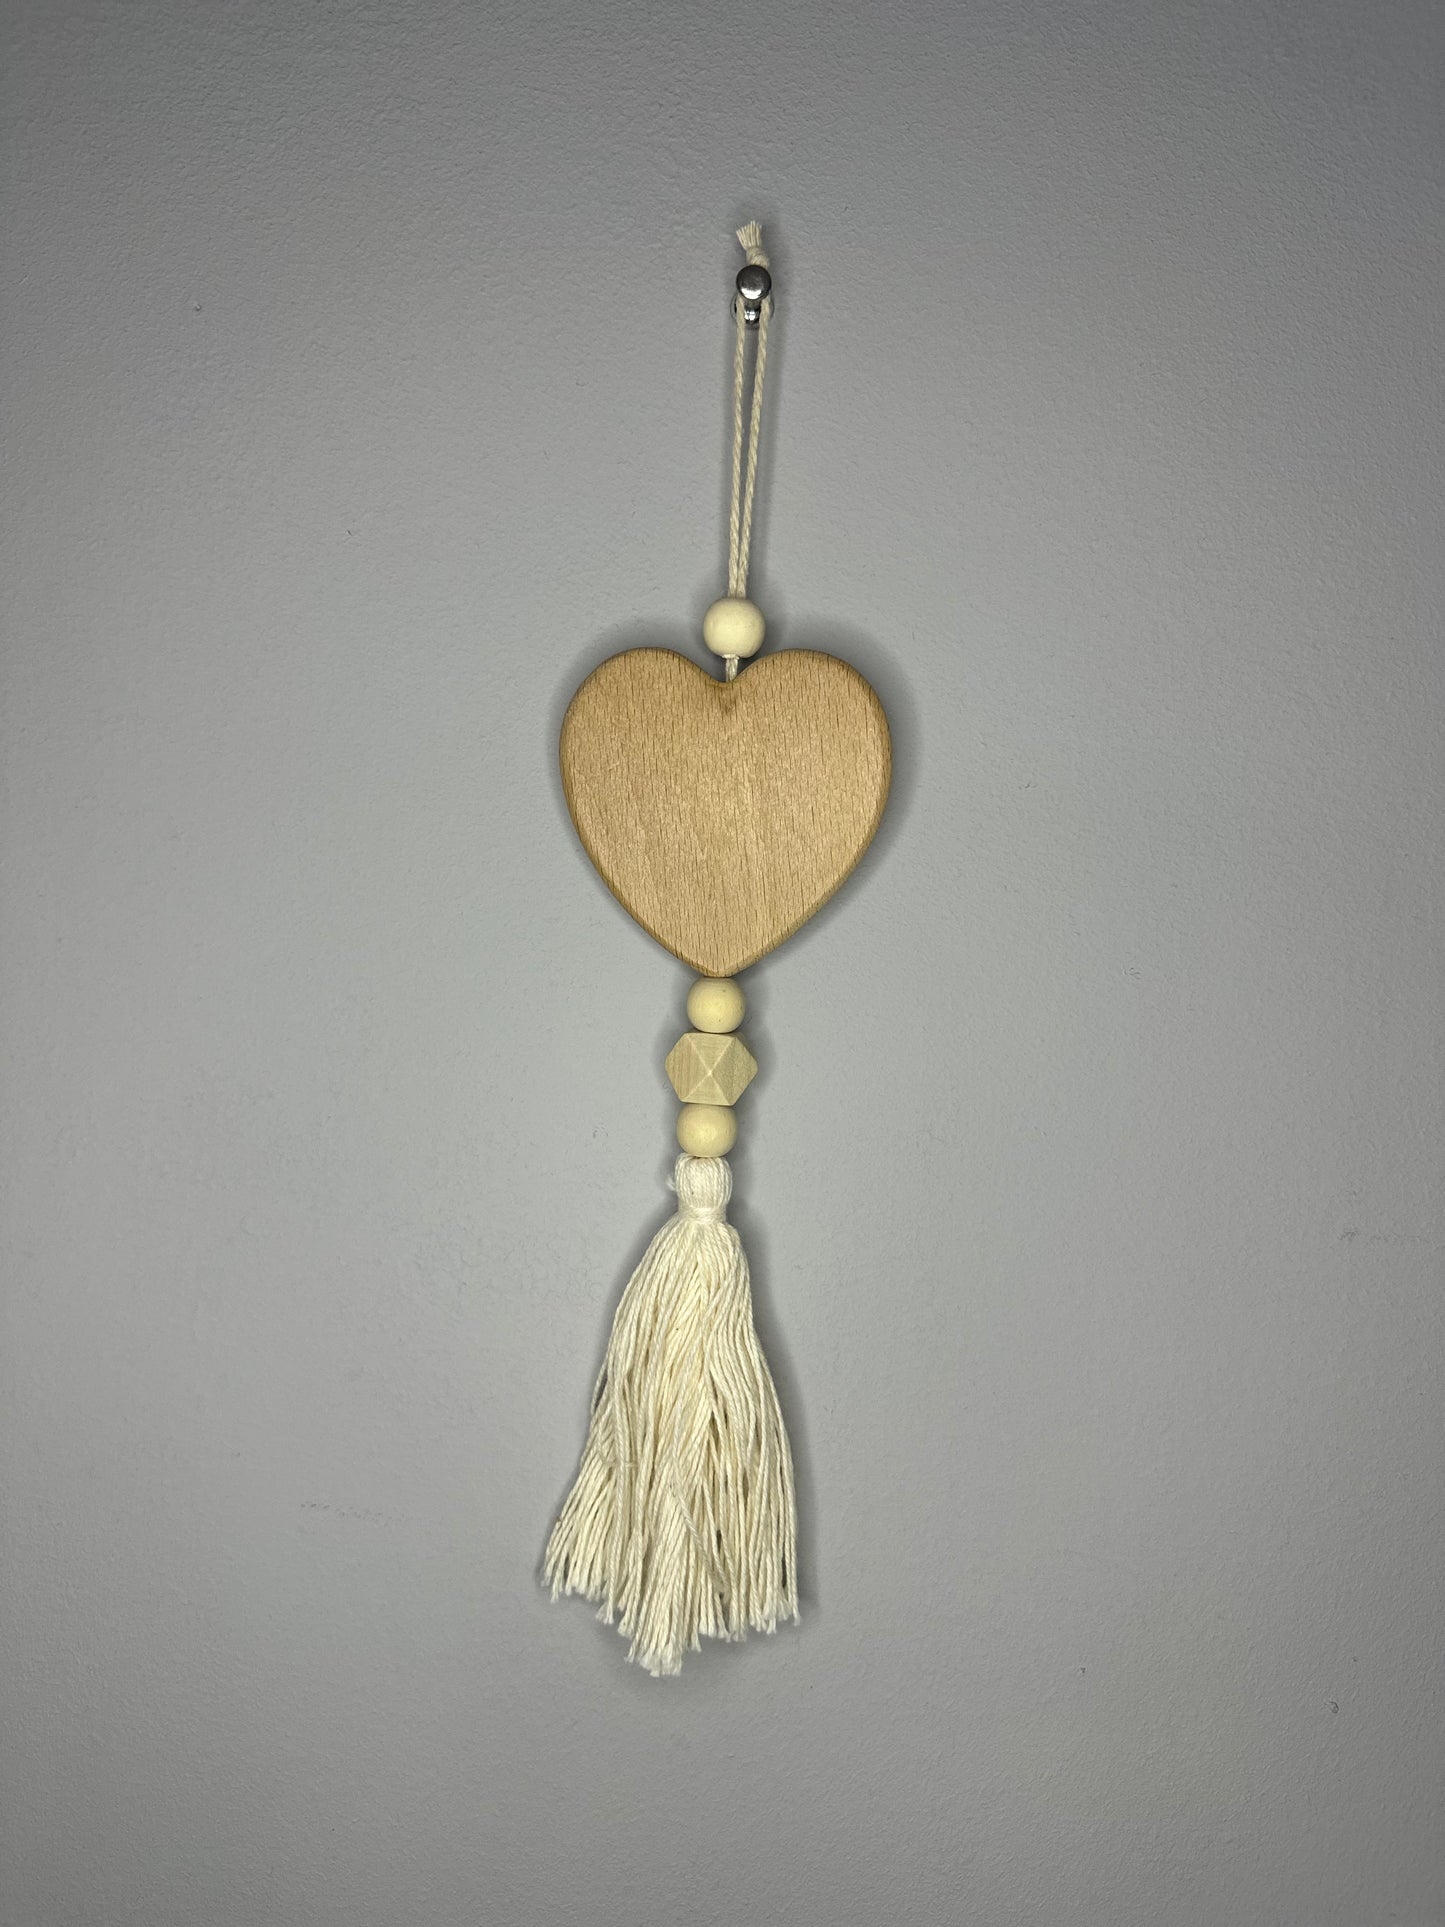 Wooden Tassell Hanging Heart